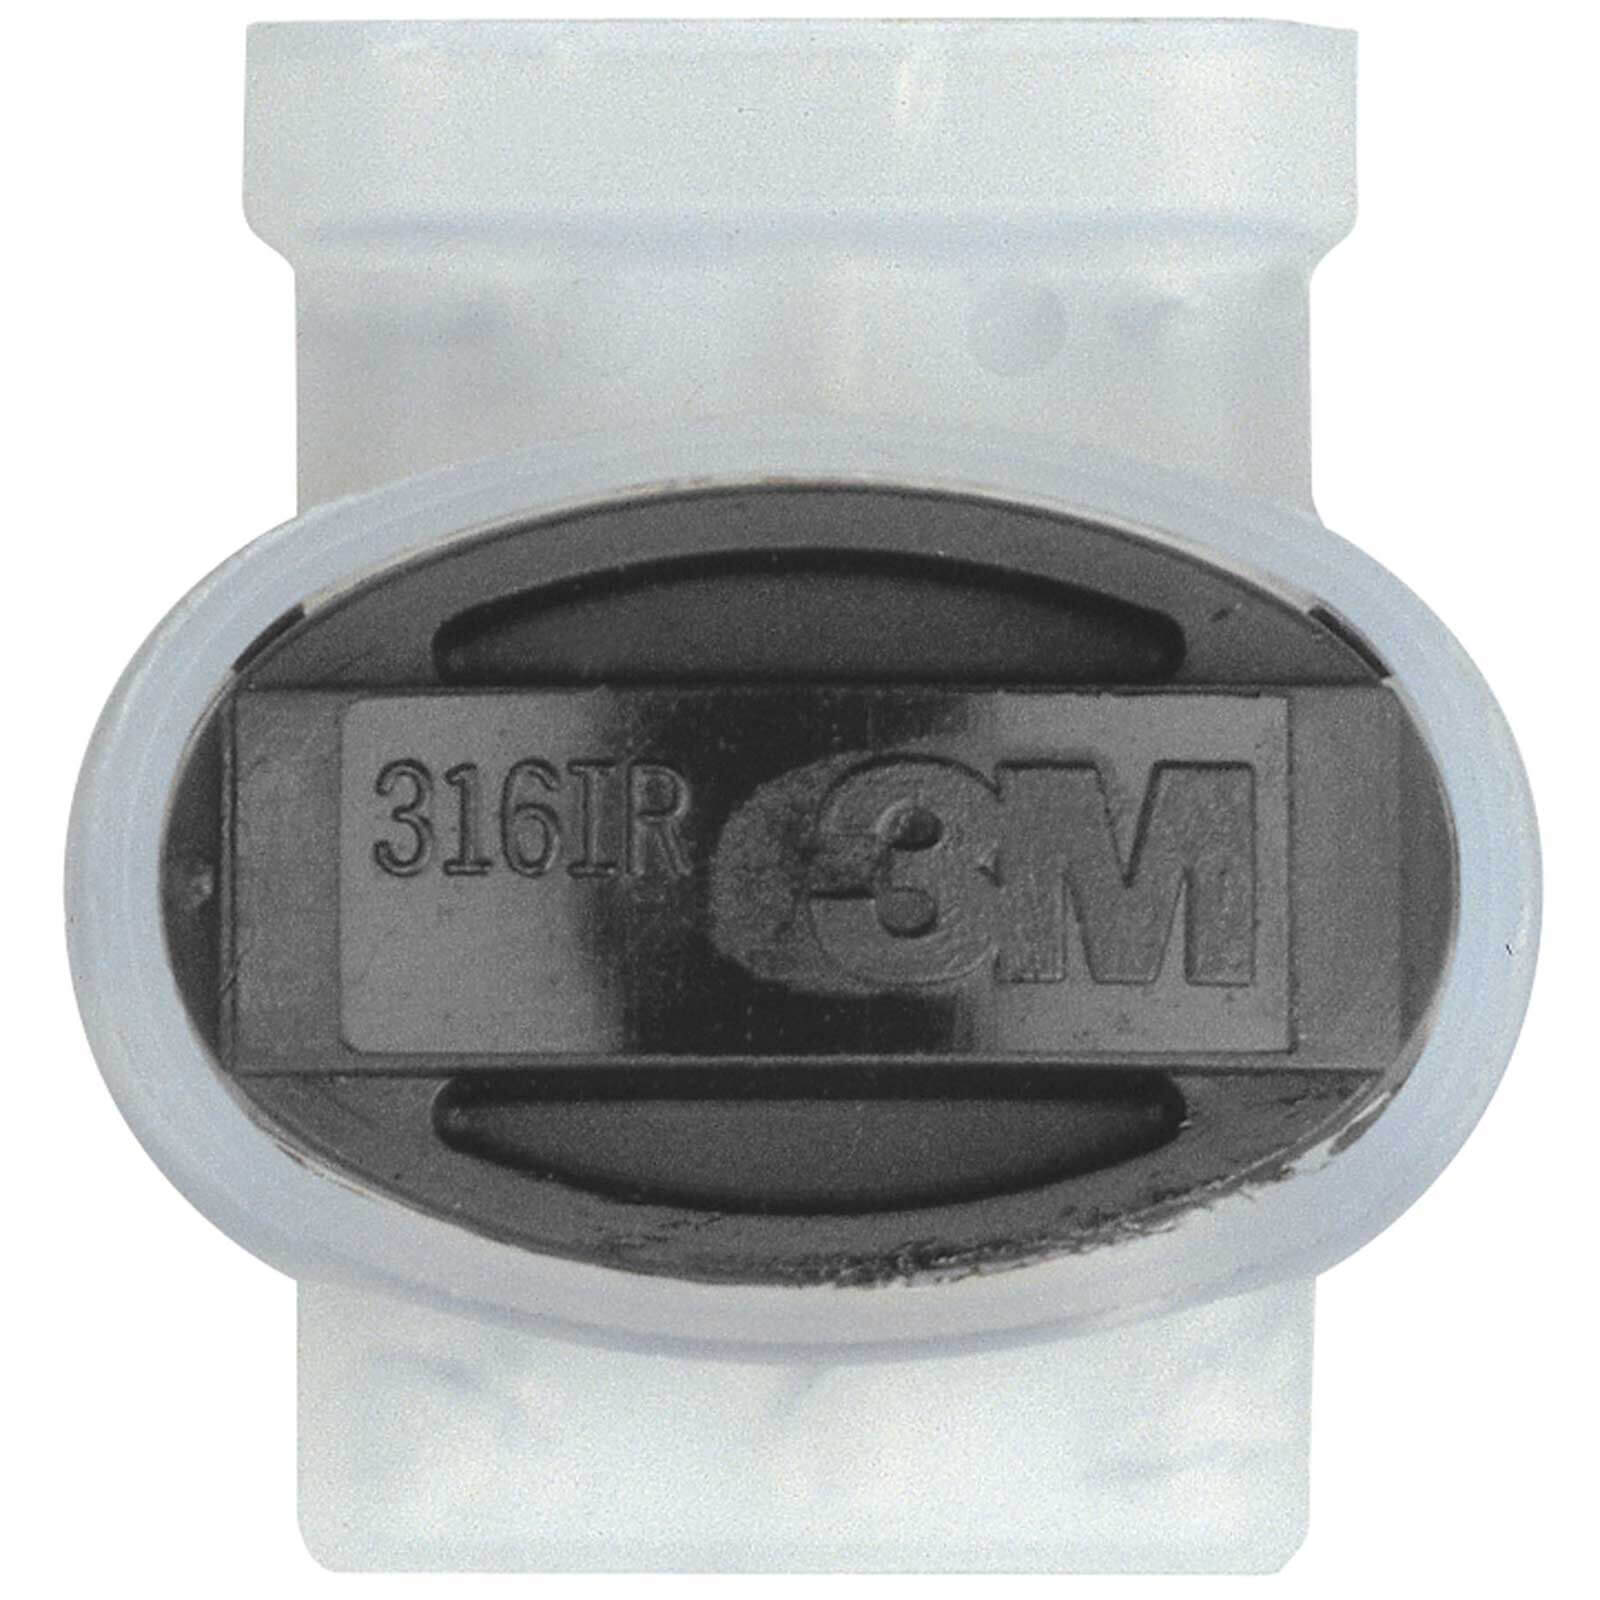 Photo of Gardena Sprinklersystem 24v Connect Cable Clip